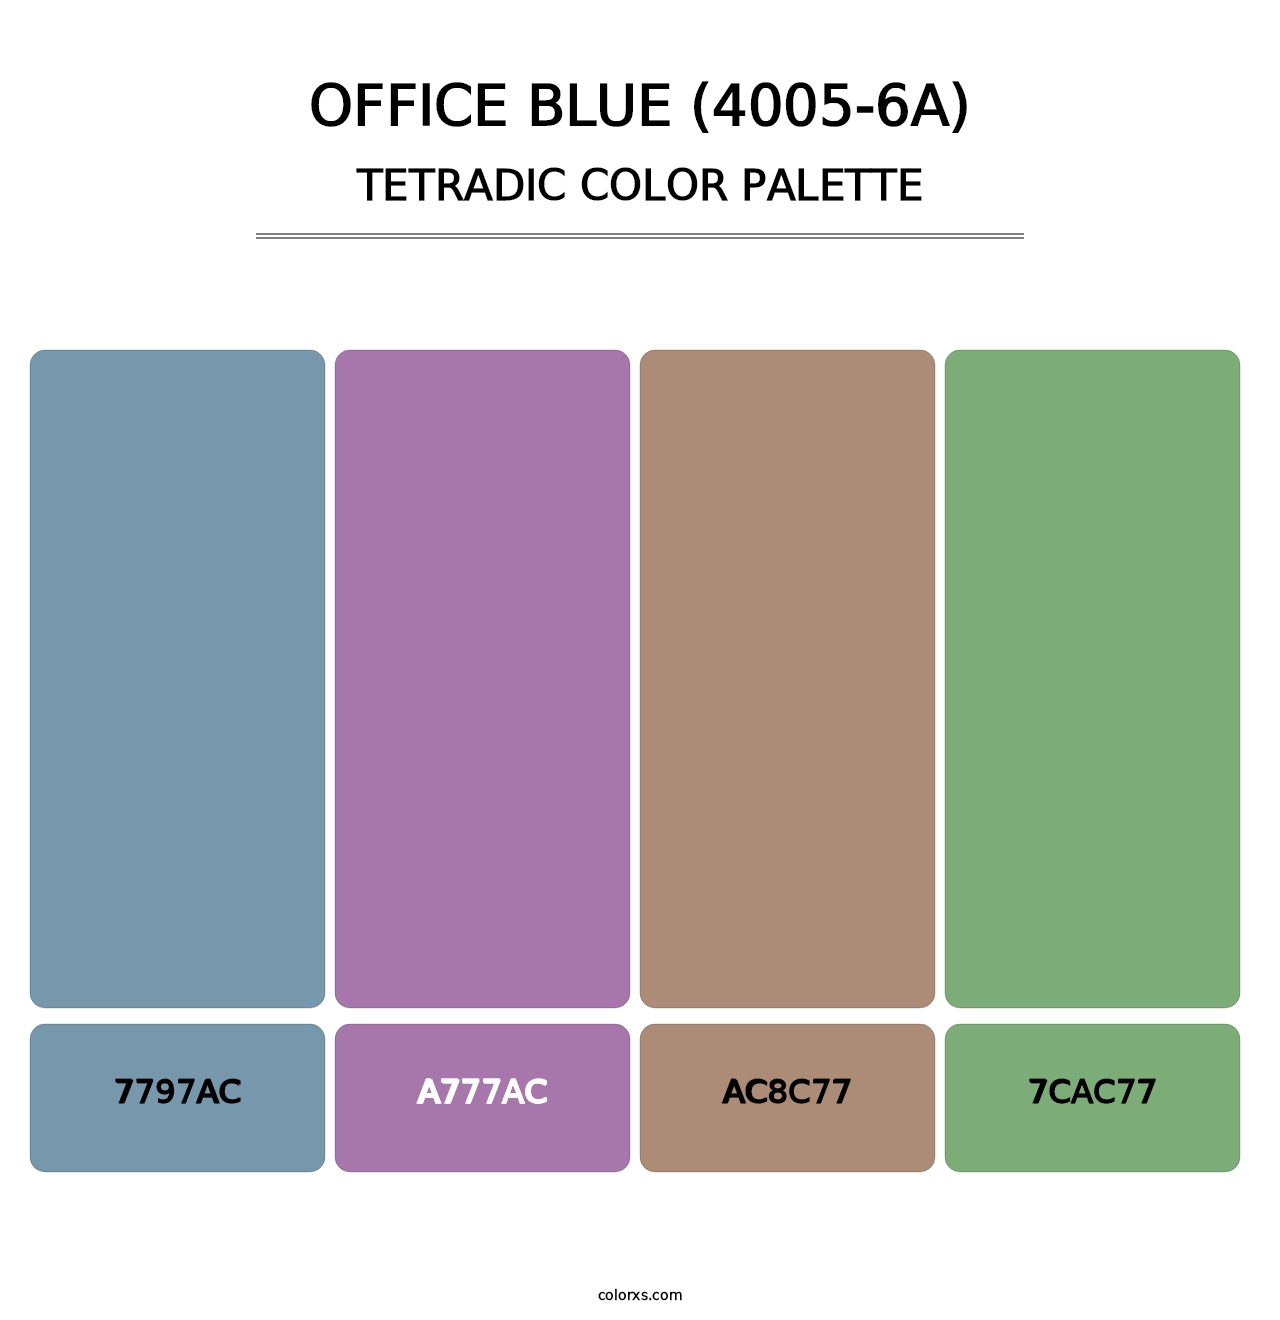 Office Blue (4005-6A) - Tetradic Color Palette